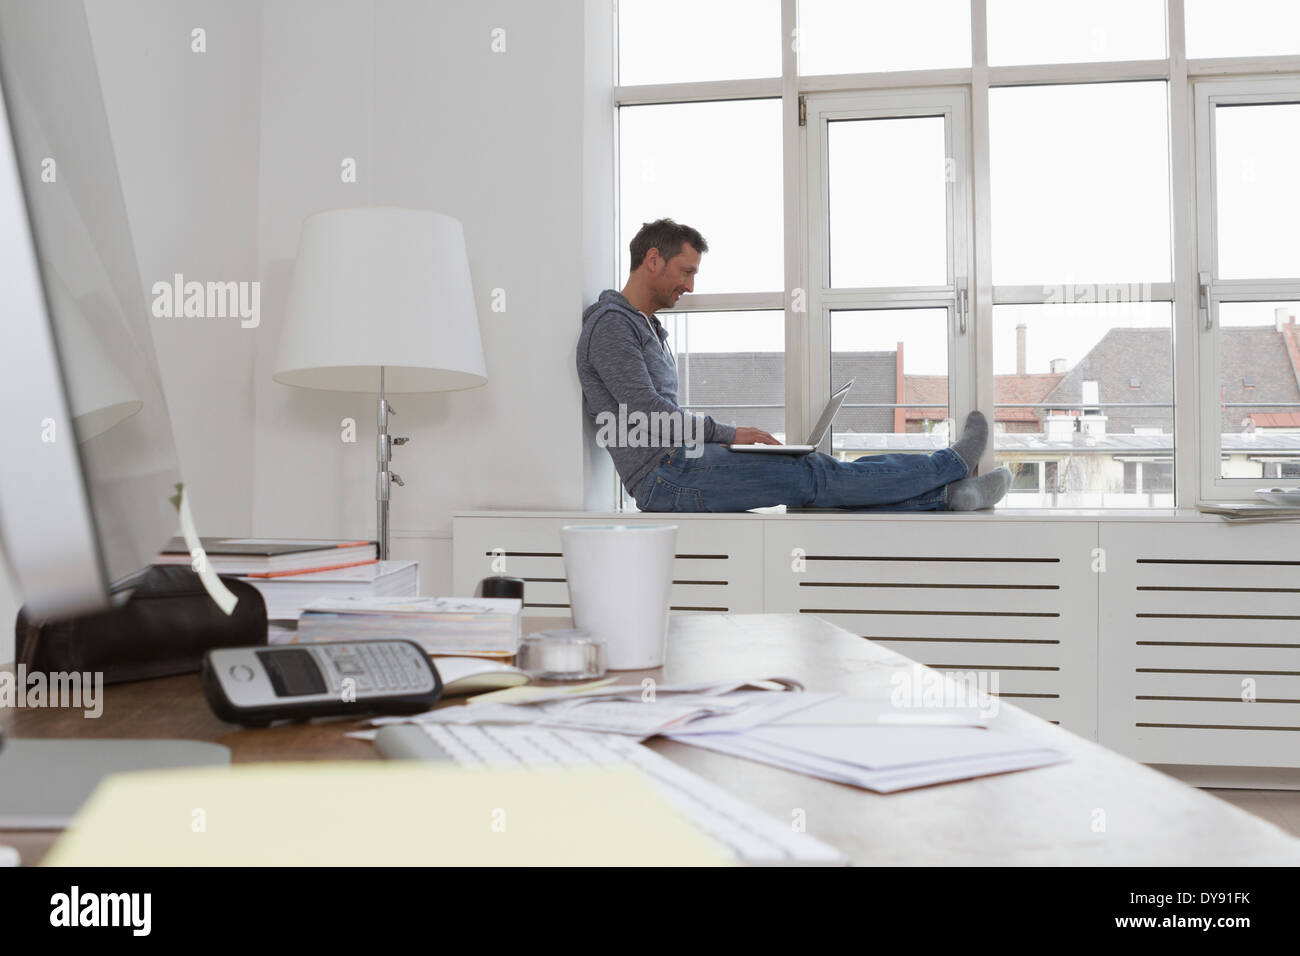 Man sitting on windowsill using laptop Stock Photo